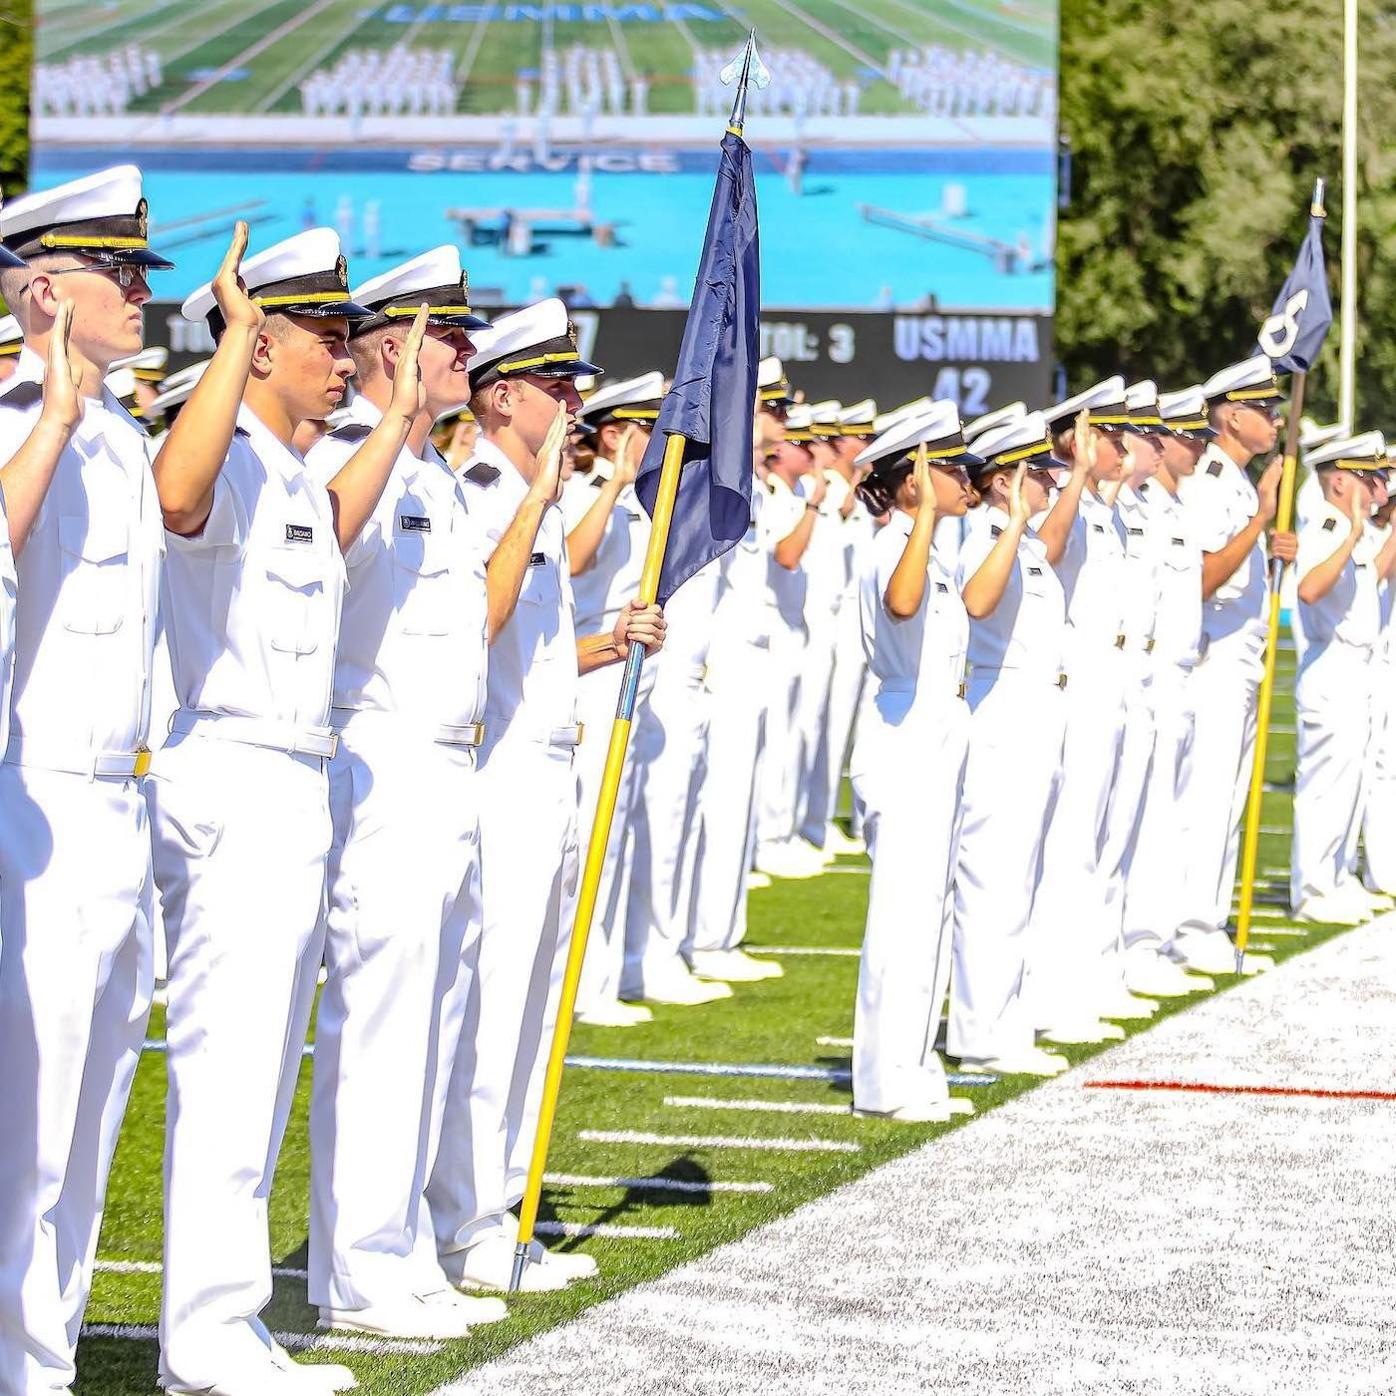 Tracy joins Midshipmen at U.S. Merchant Marine Academy